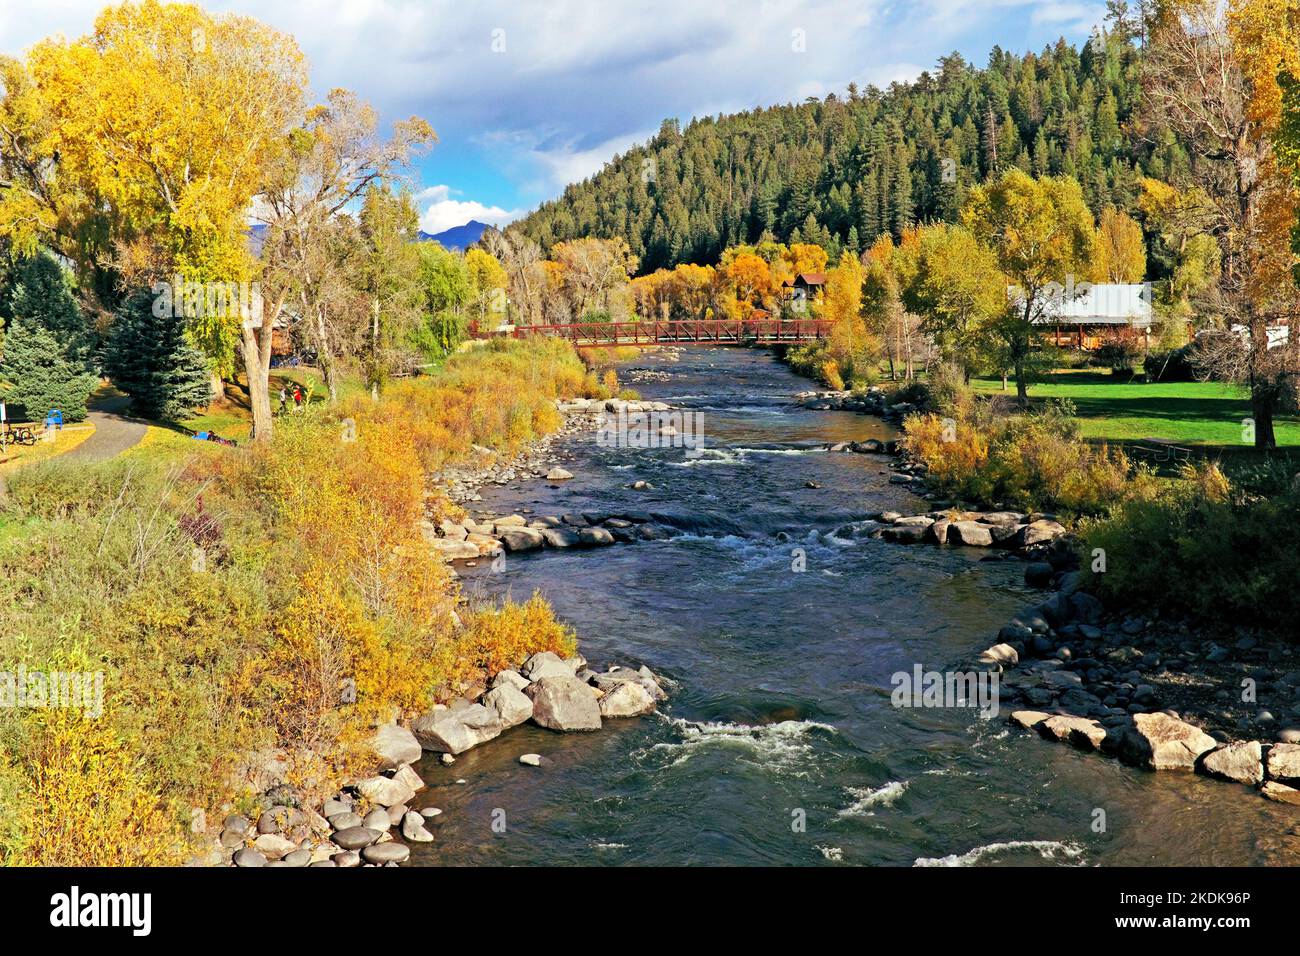 The San Juan River flows through the fall landscape in the San Juan Mountain town of Pagosa Springs, Colorado, USA on October 11. 2022. Stock Photo